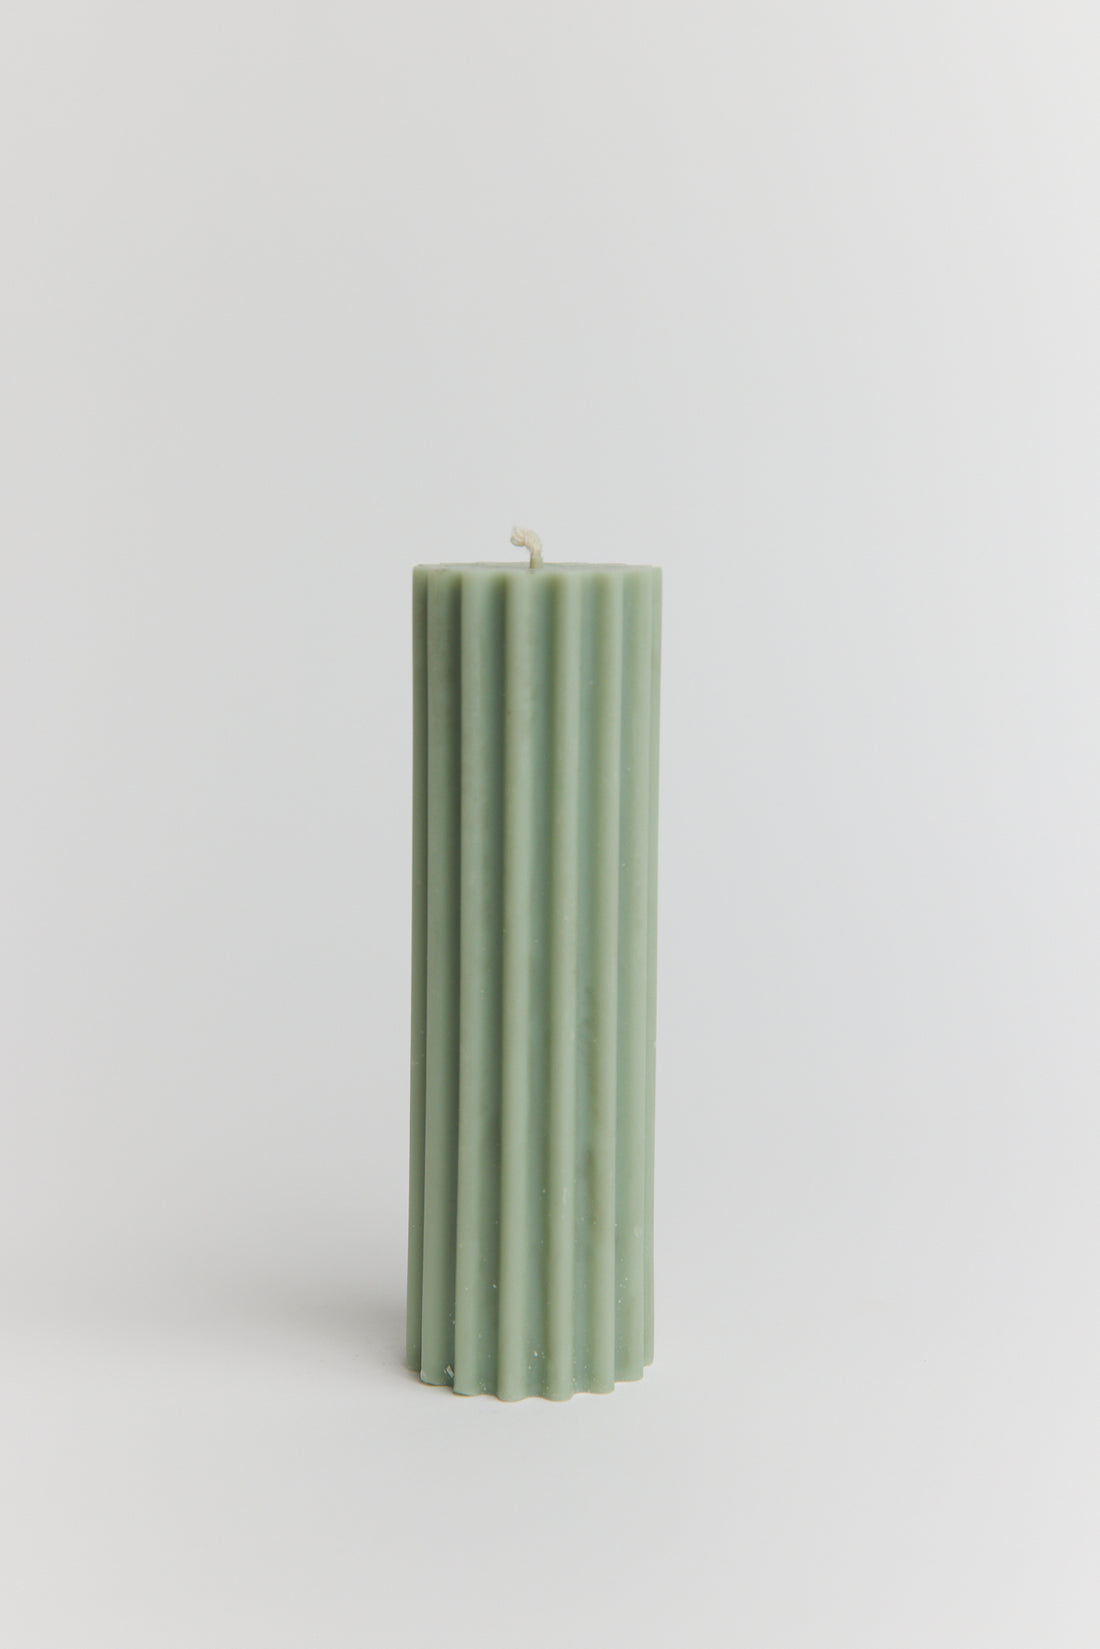 Romy - Ribbed Pillar Candle